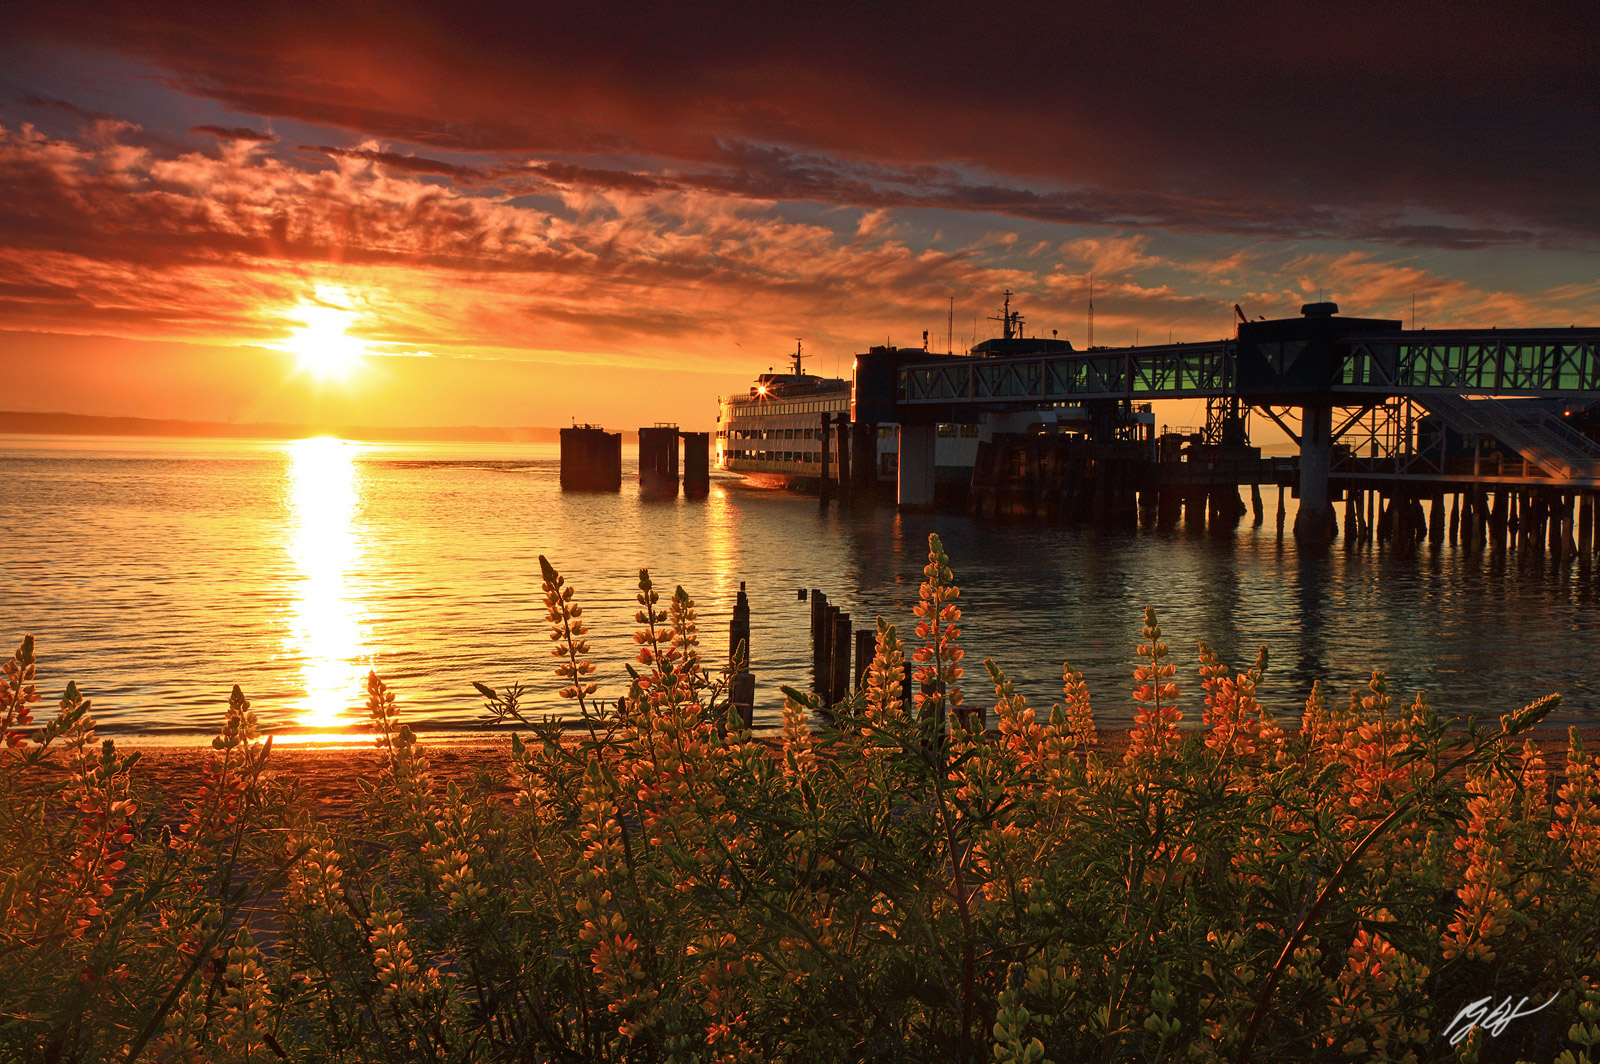 Sunset Wildflowers and the Edmonds Ferry at Dock from Edmonds Beach in Edmonds Washington